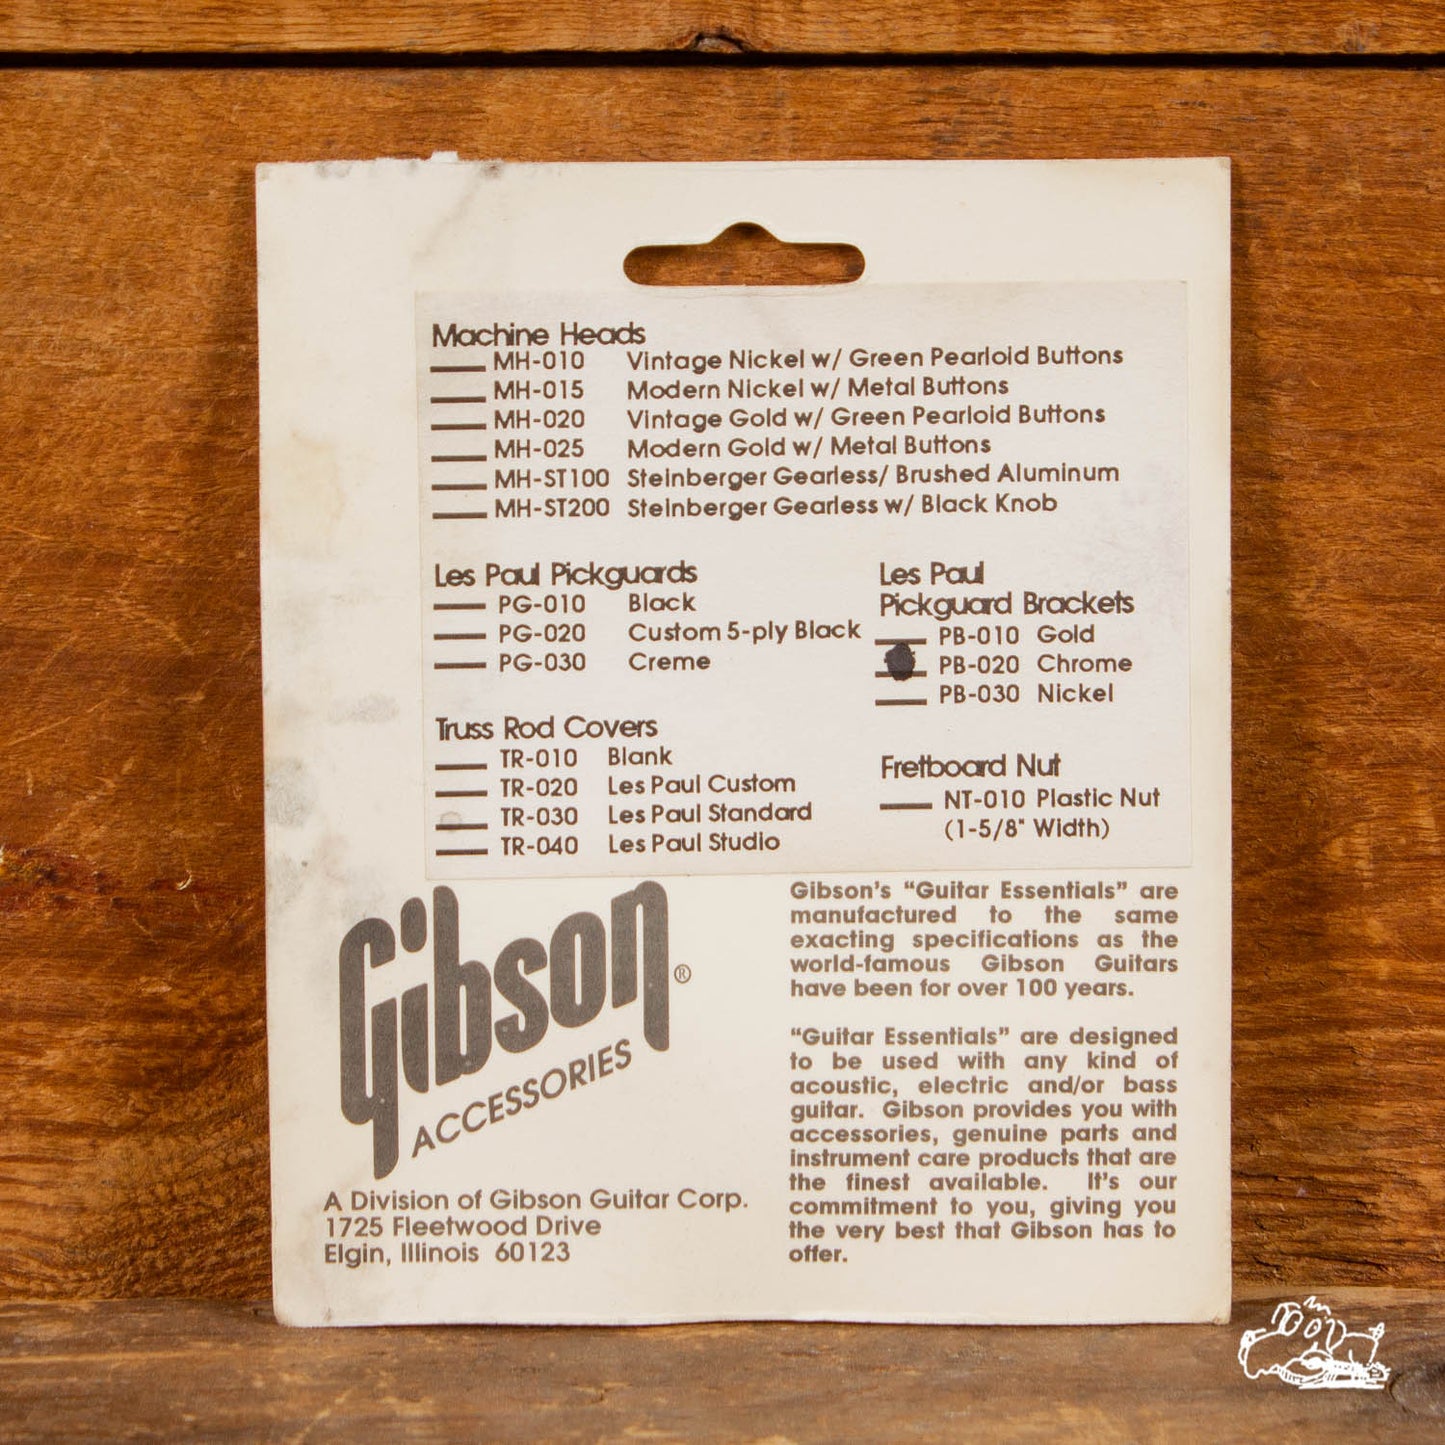 Gibson Accessories Les Paul Pickguard Bracket PB-020 - Chrome